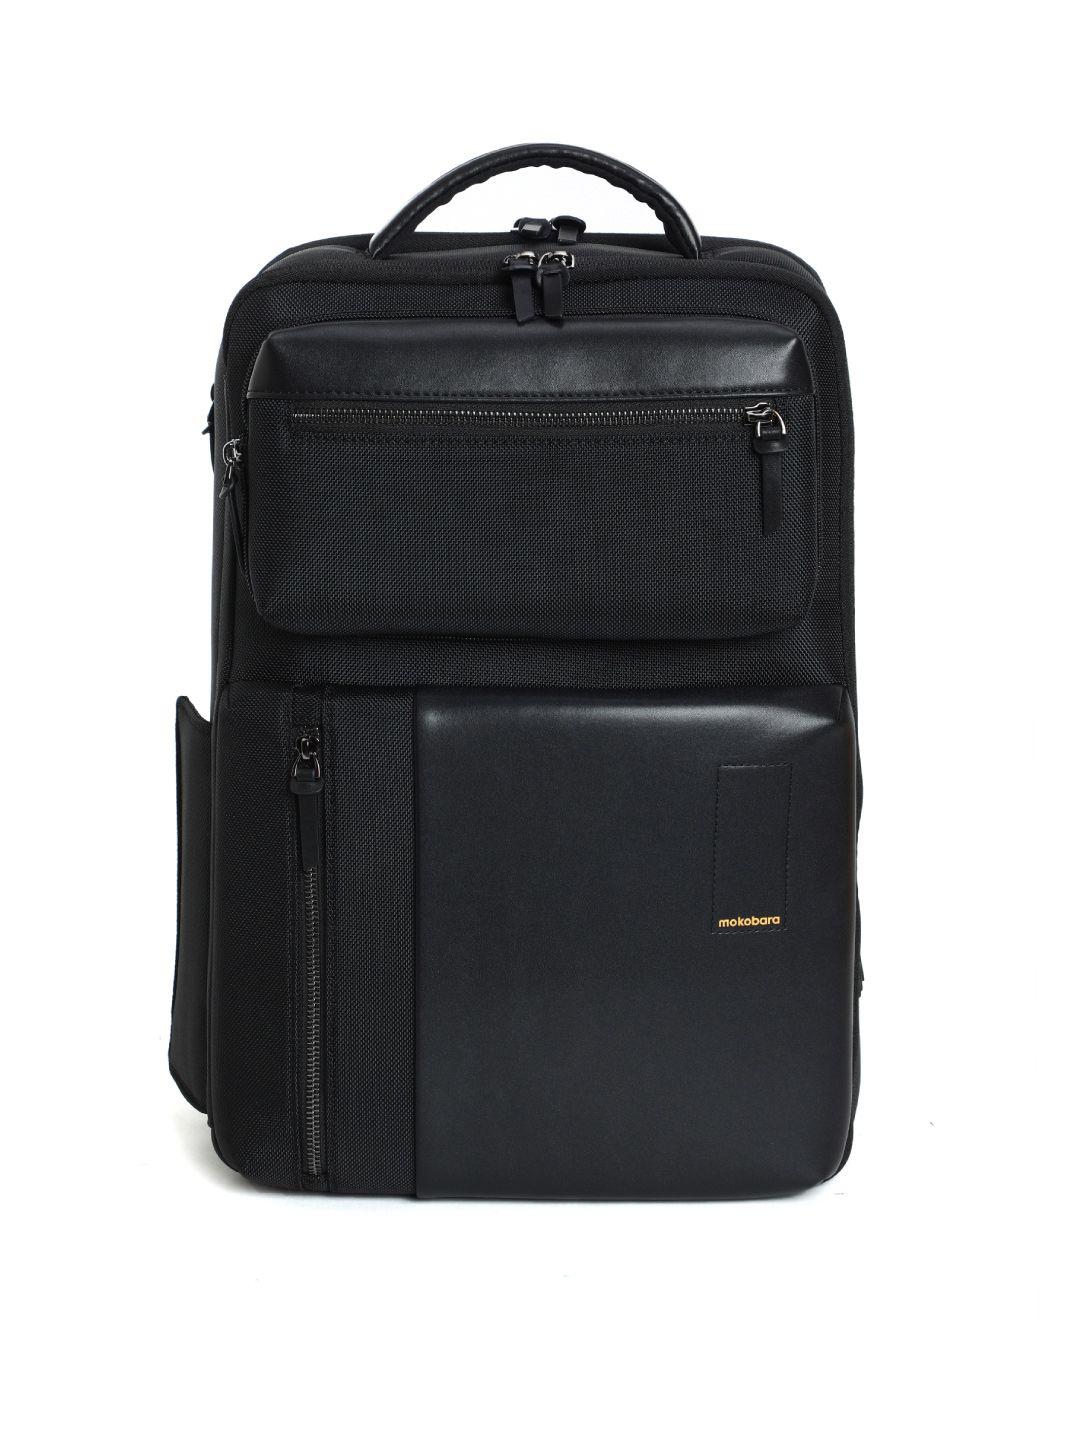 mokobara unisex black nylon backpack